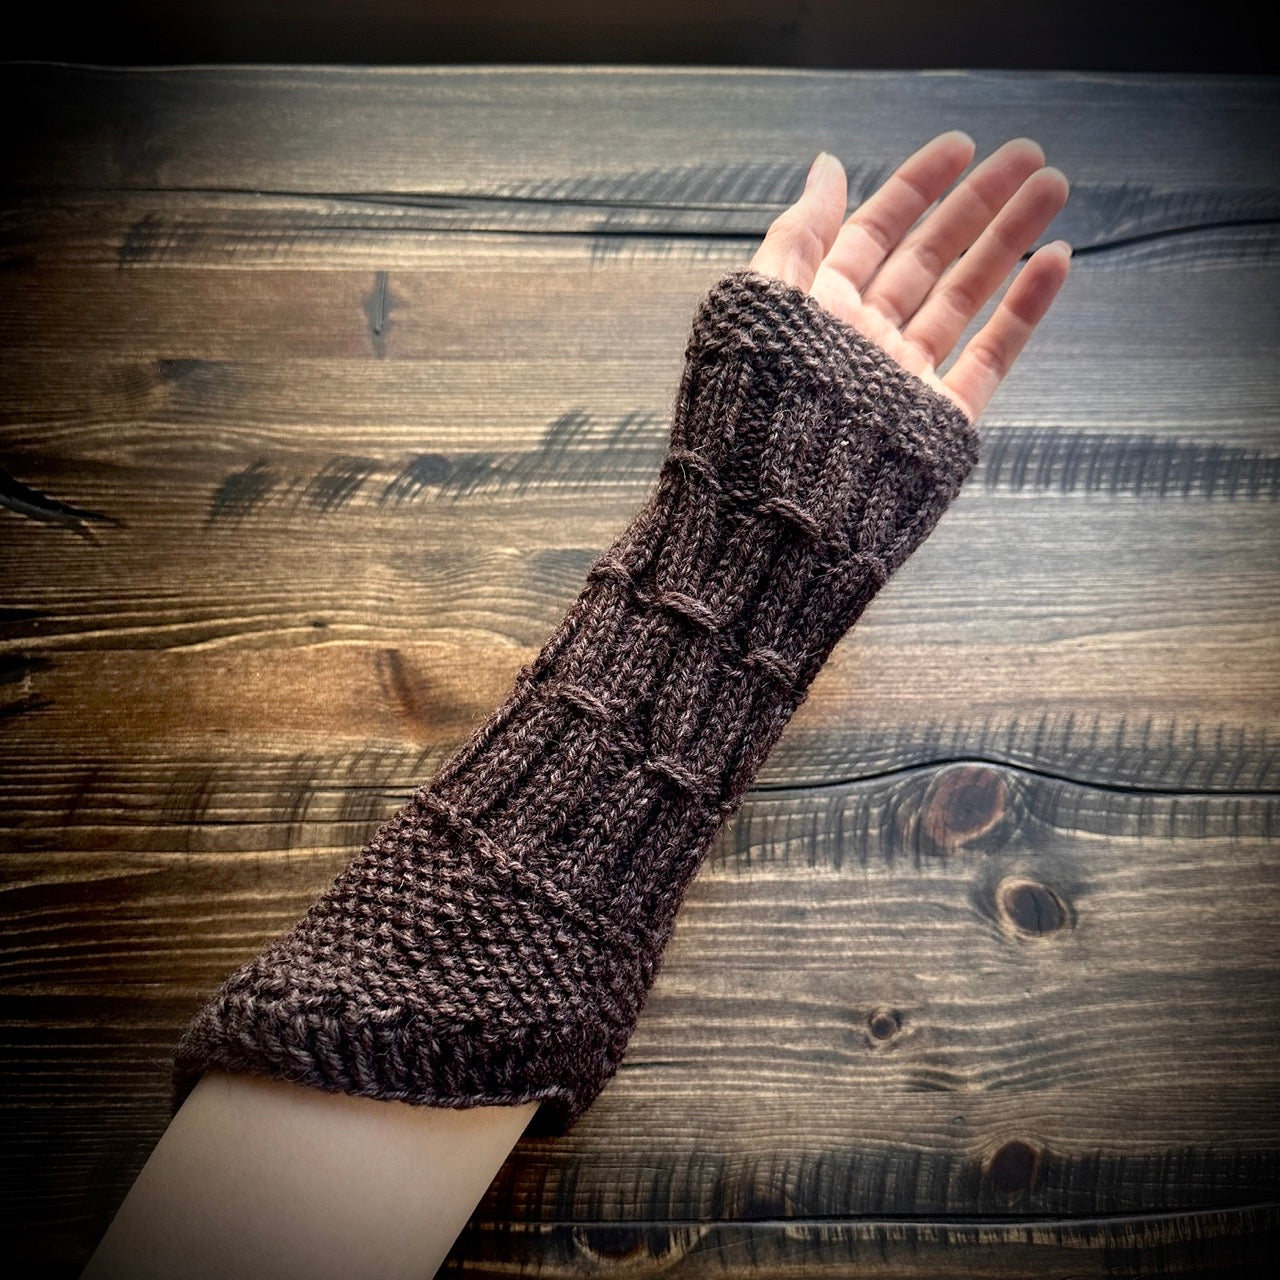 Handmade knitted earthy brown arm warmers